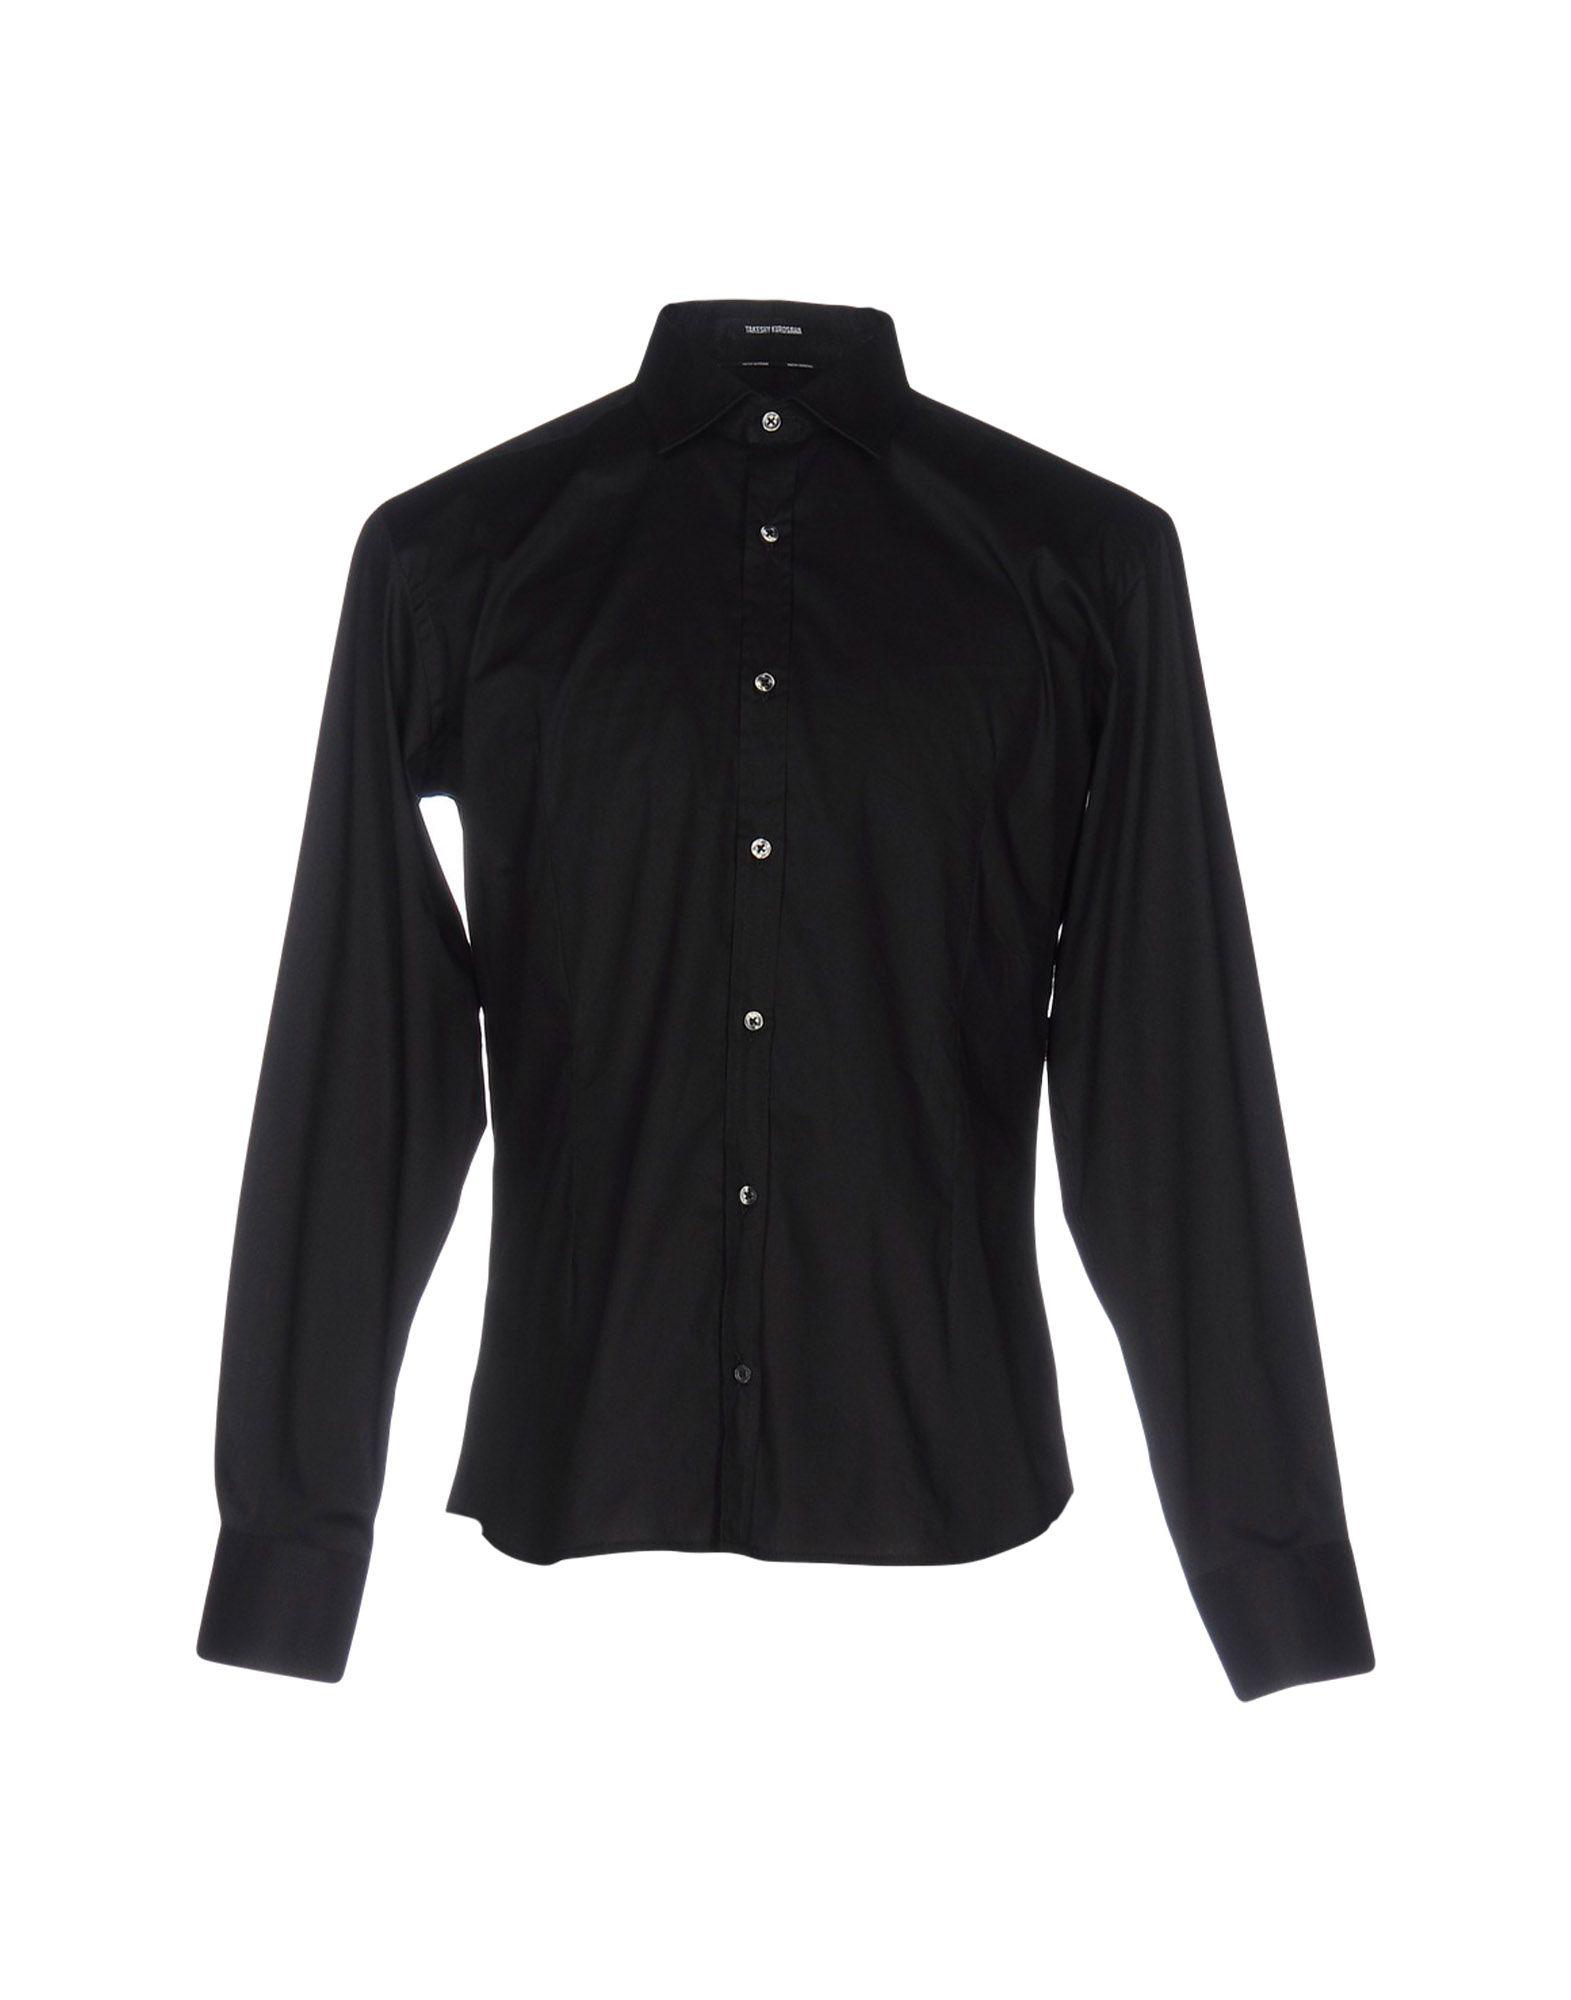 Takeshy Kurosawa Cotton Shirt in Black for Men - Lyst